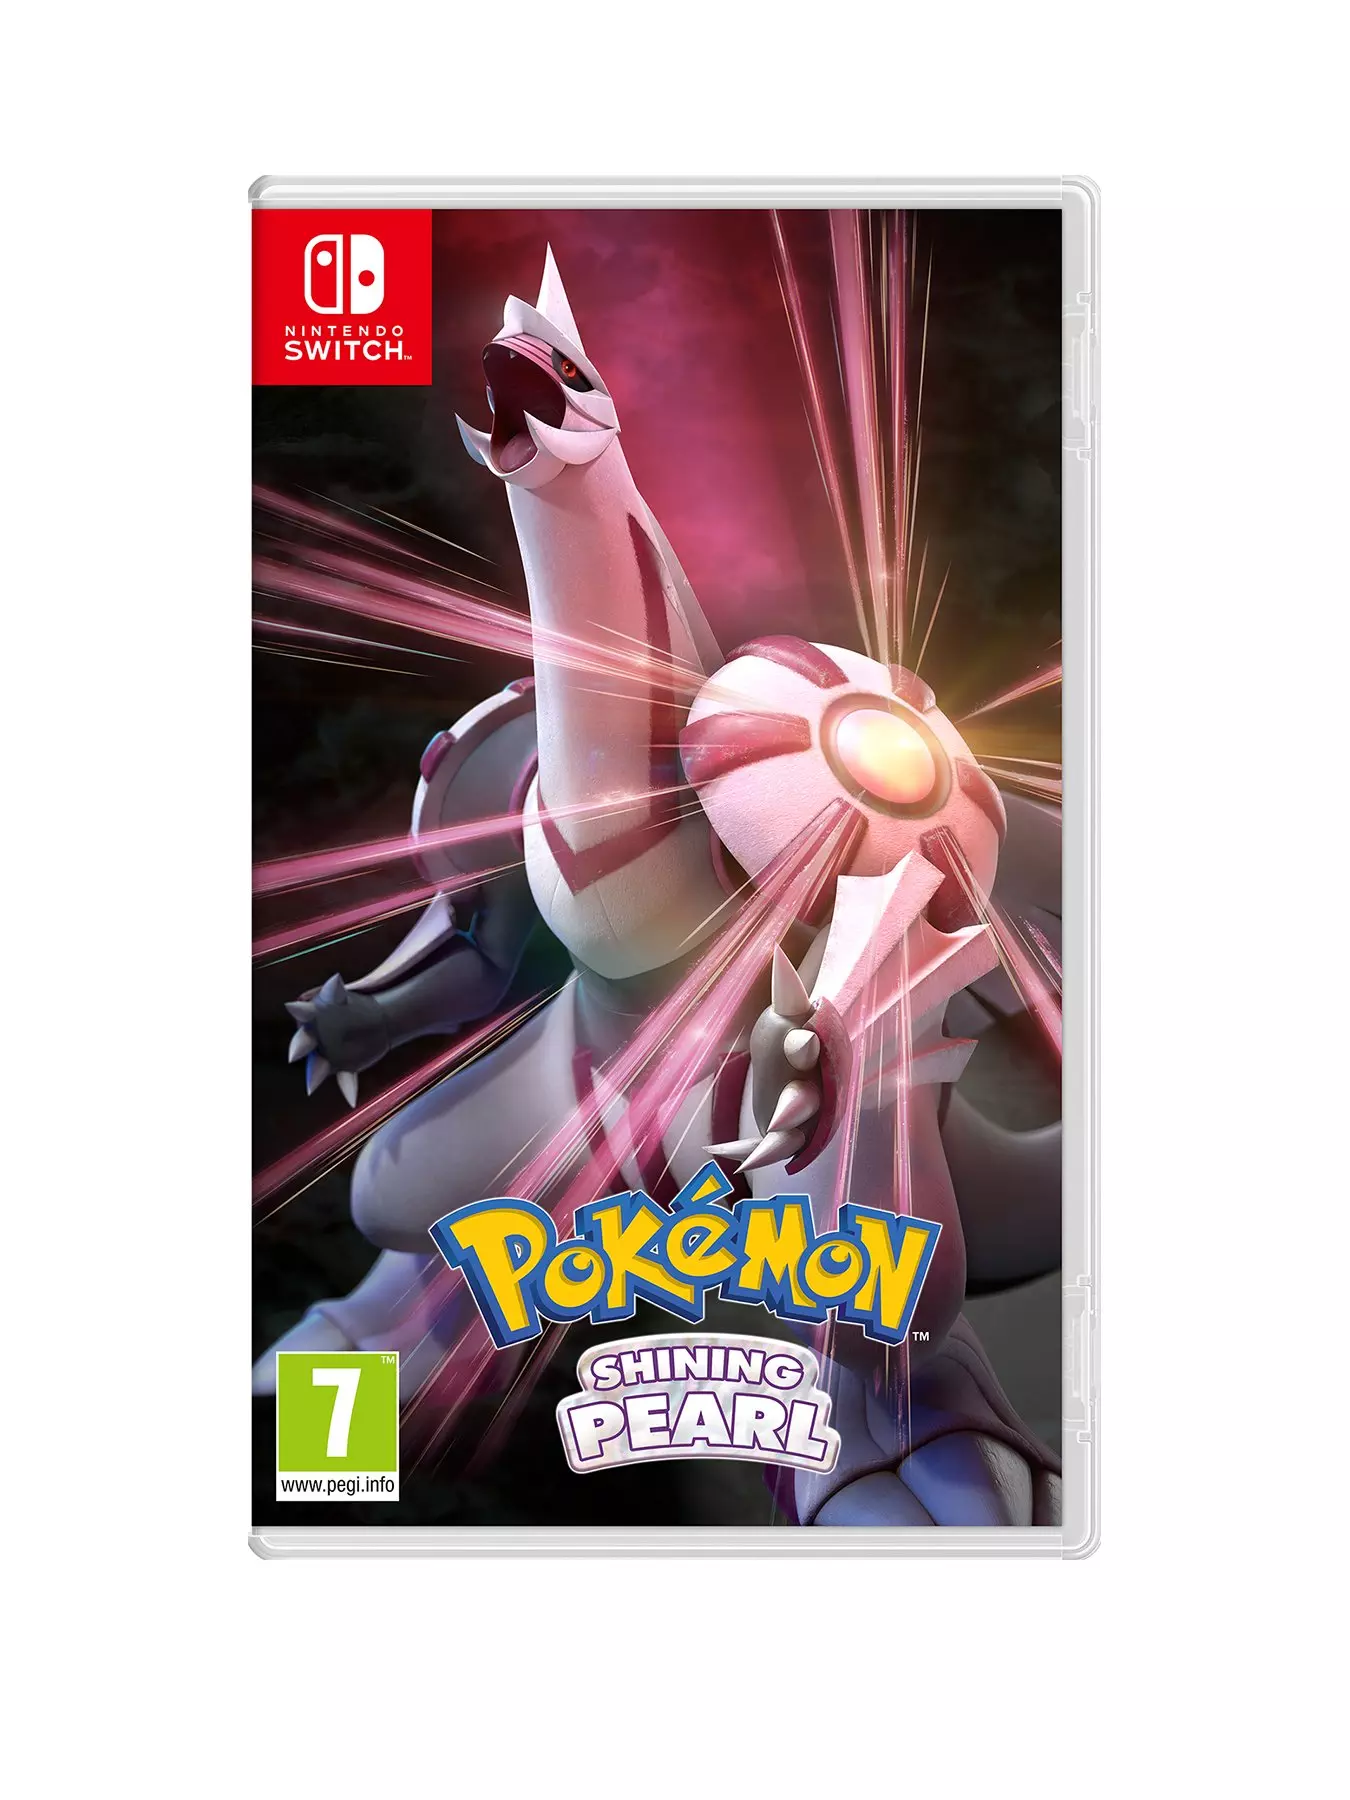 Pokémon Shining Pearl - Full Intro [1080p 60fps] 